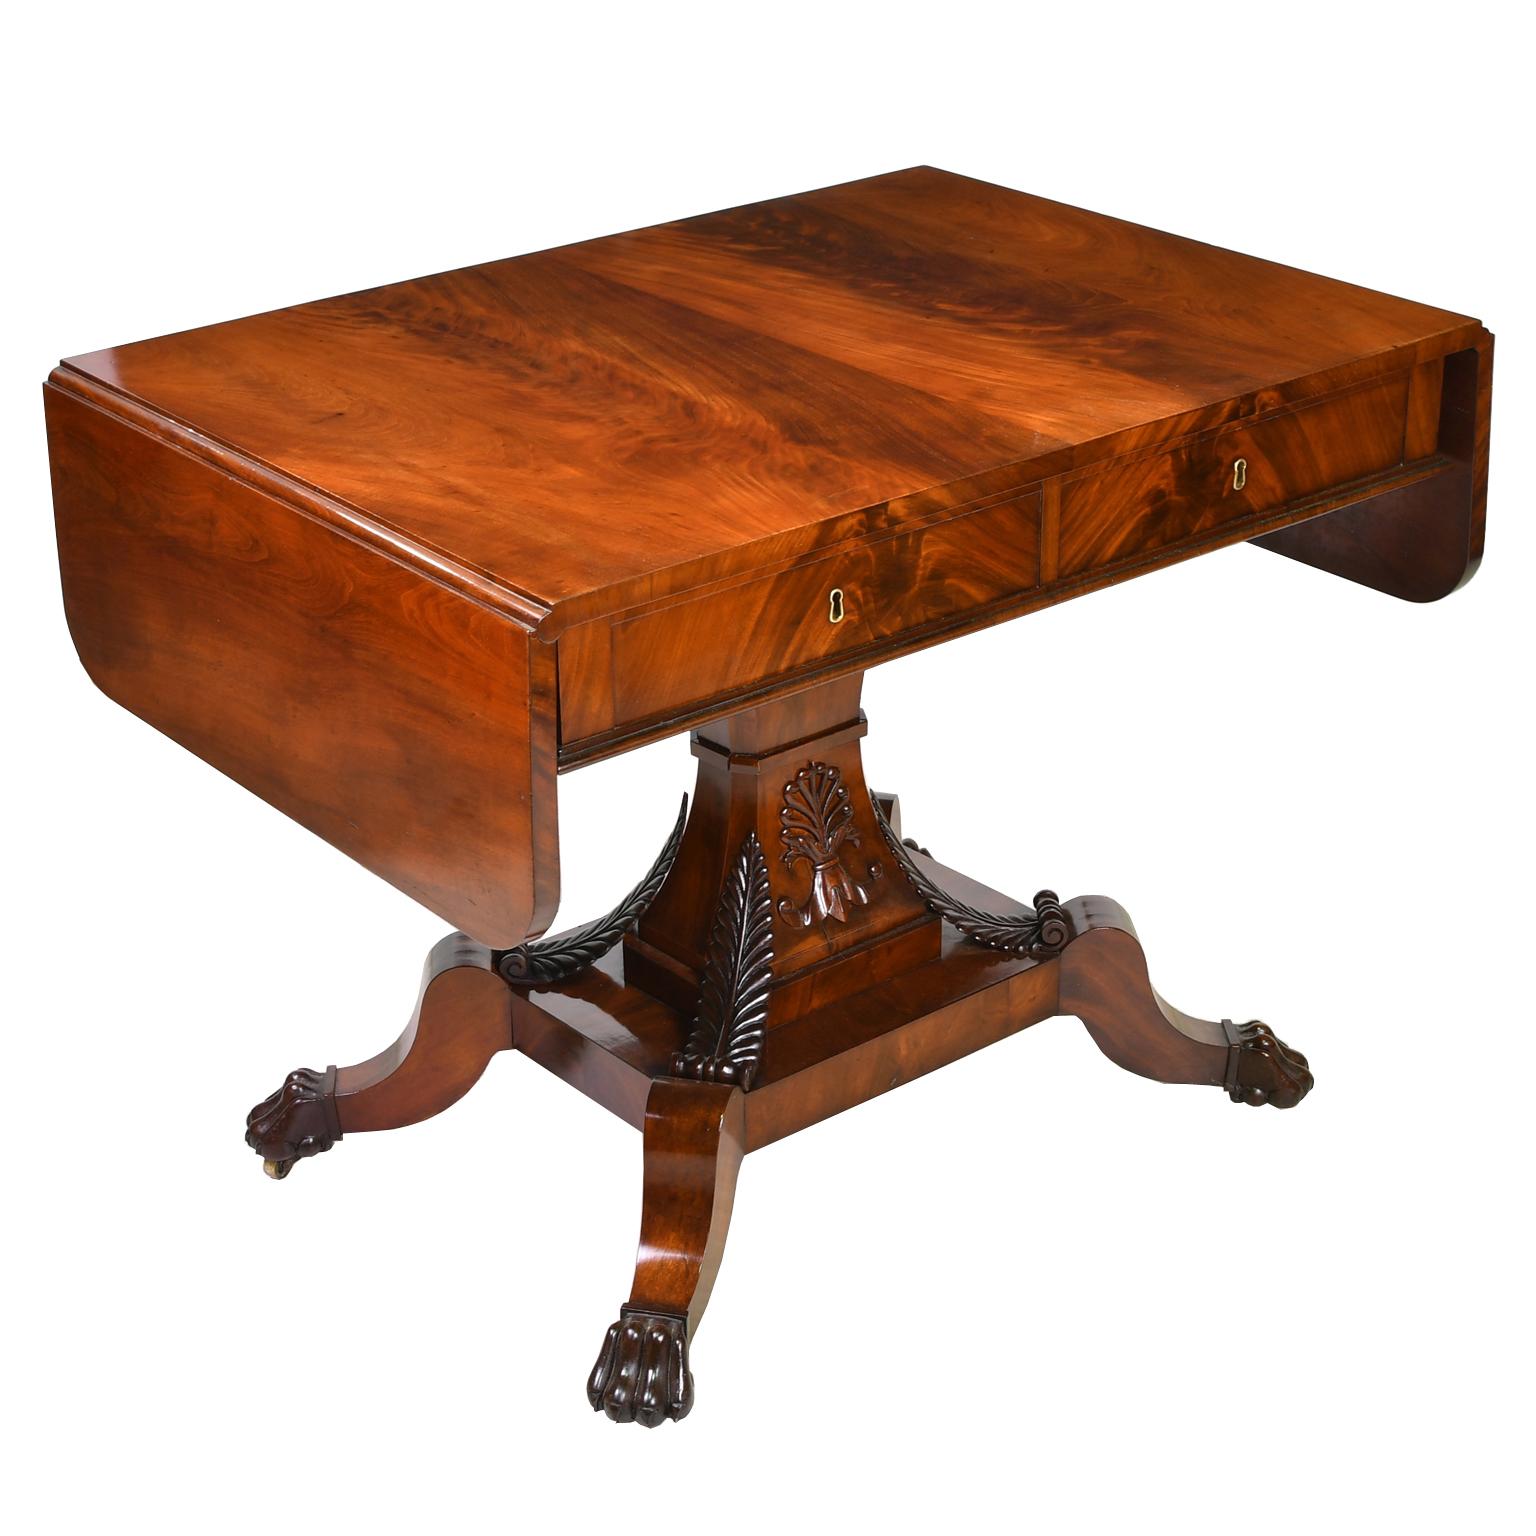  Swedish Karl Johan Salon/Sofa Table or Desk in West Indies Mahogany, c. 1825 For Sale 2